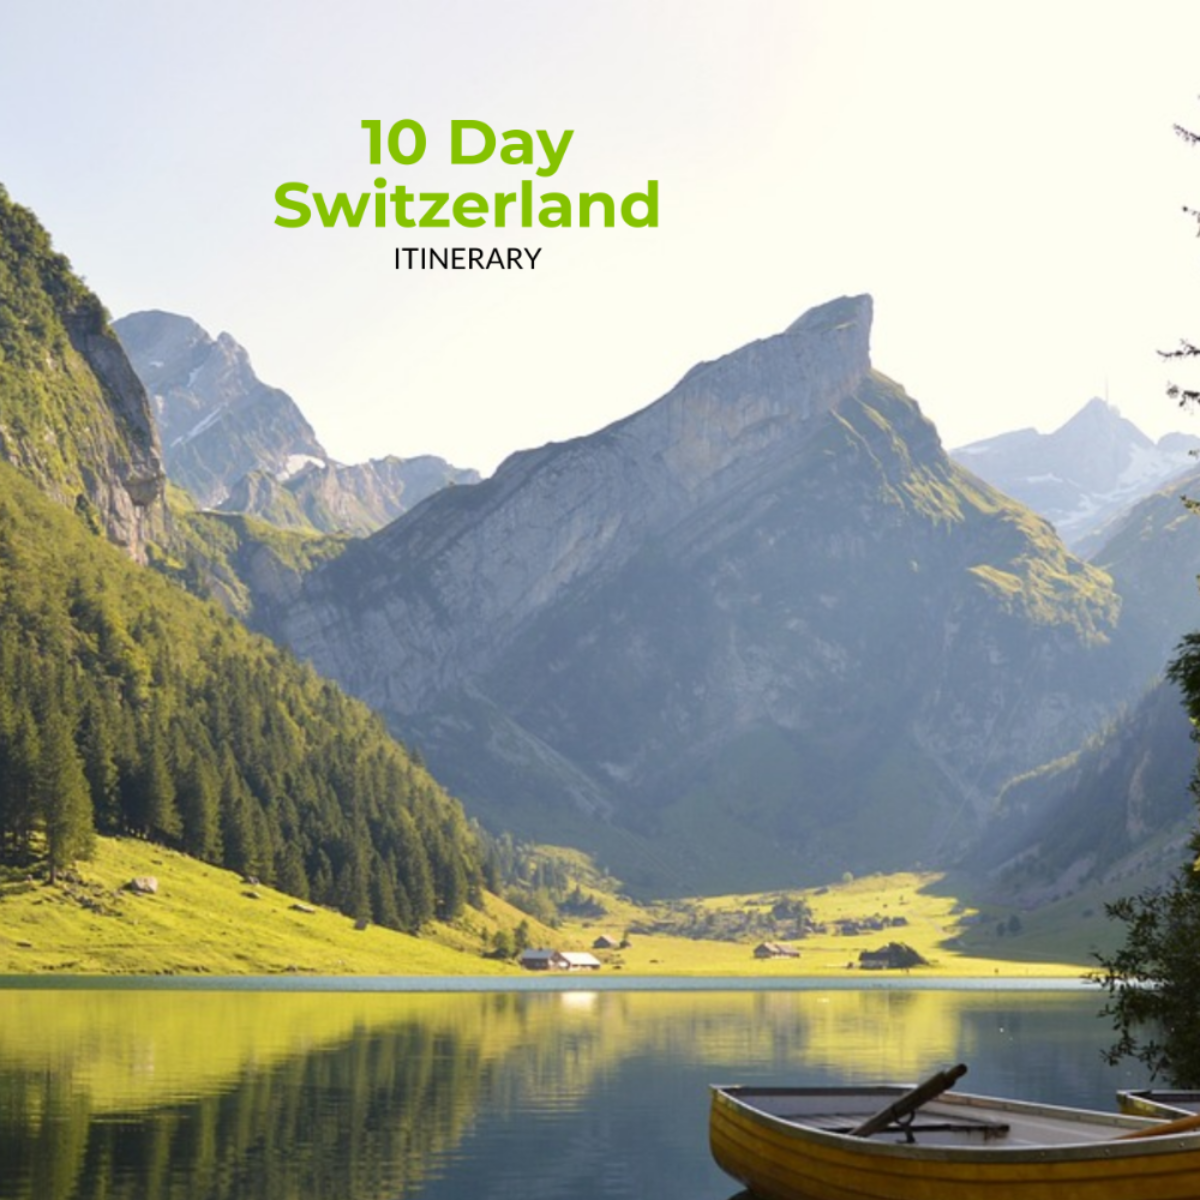 10 Day Switzerland Itinerary Template